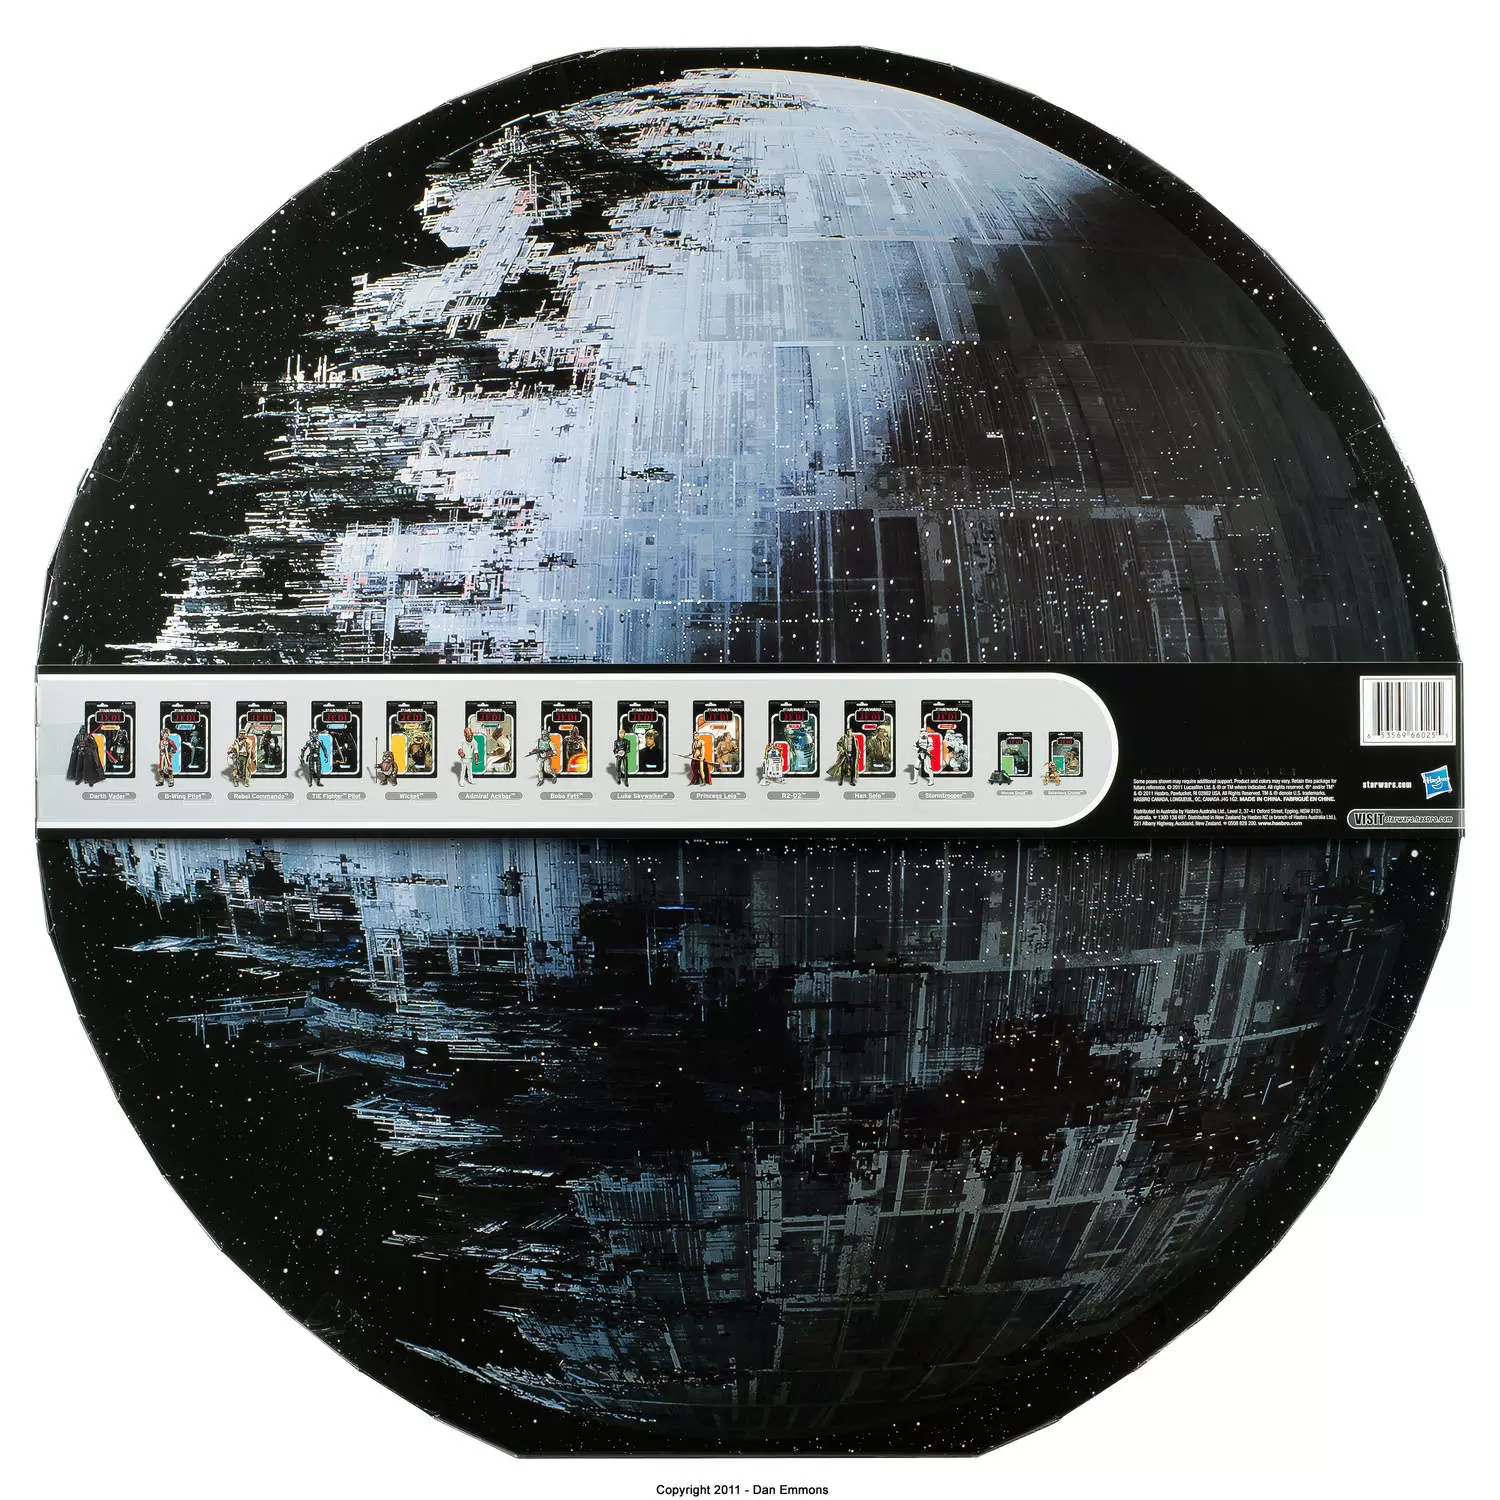 The Vintage Collection - Revenge of the Jedi 14-Figure Death Star Set (SDCC 2011)